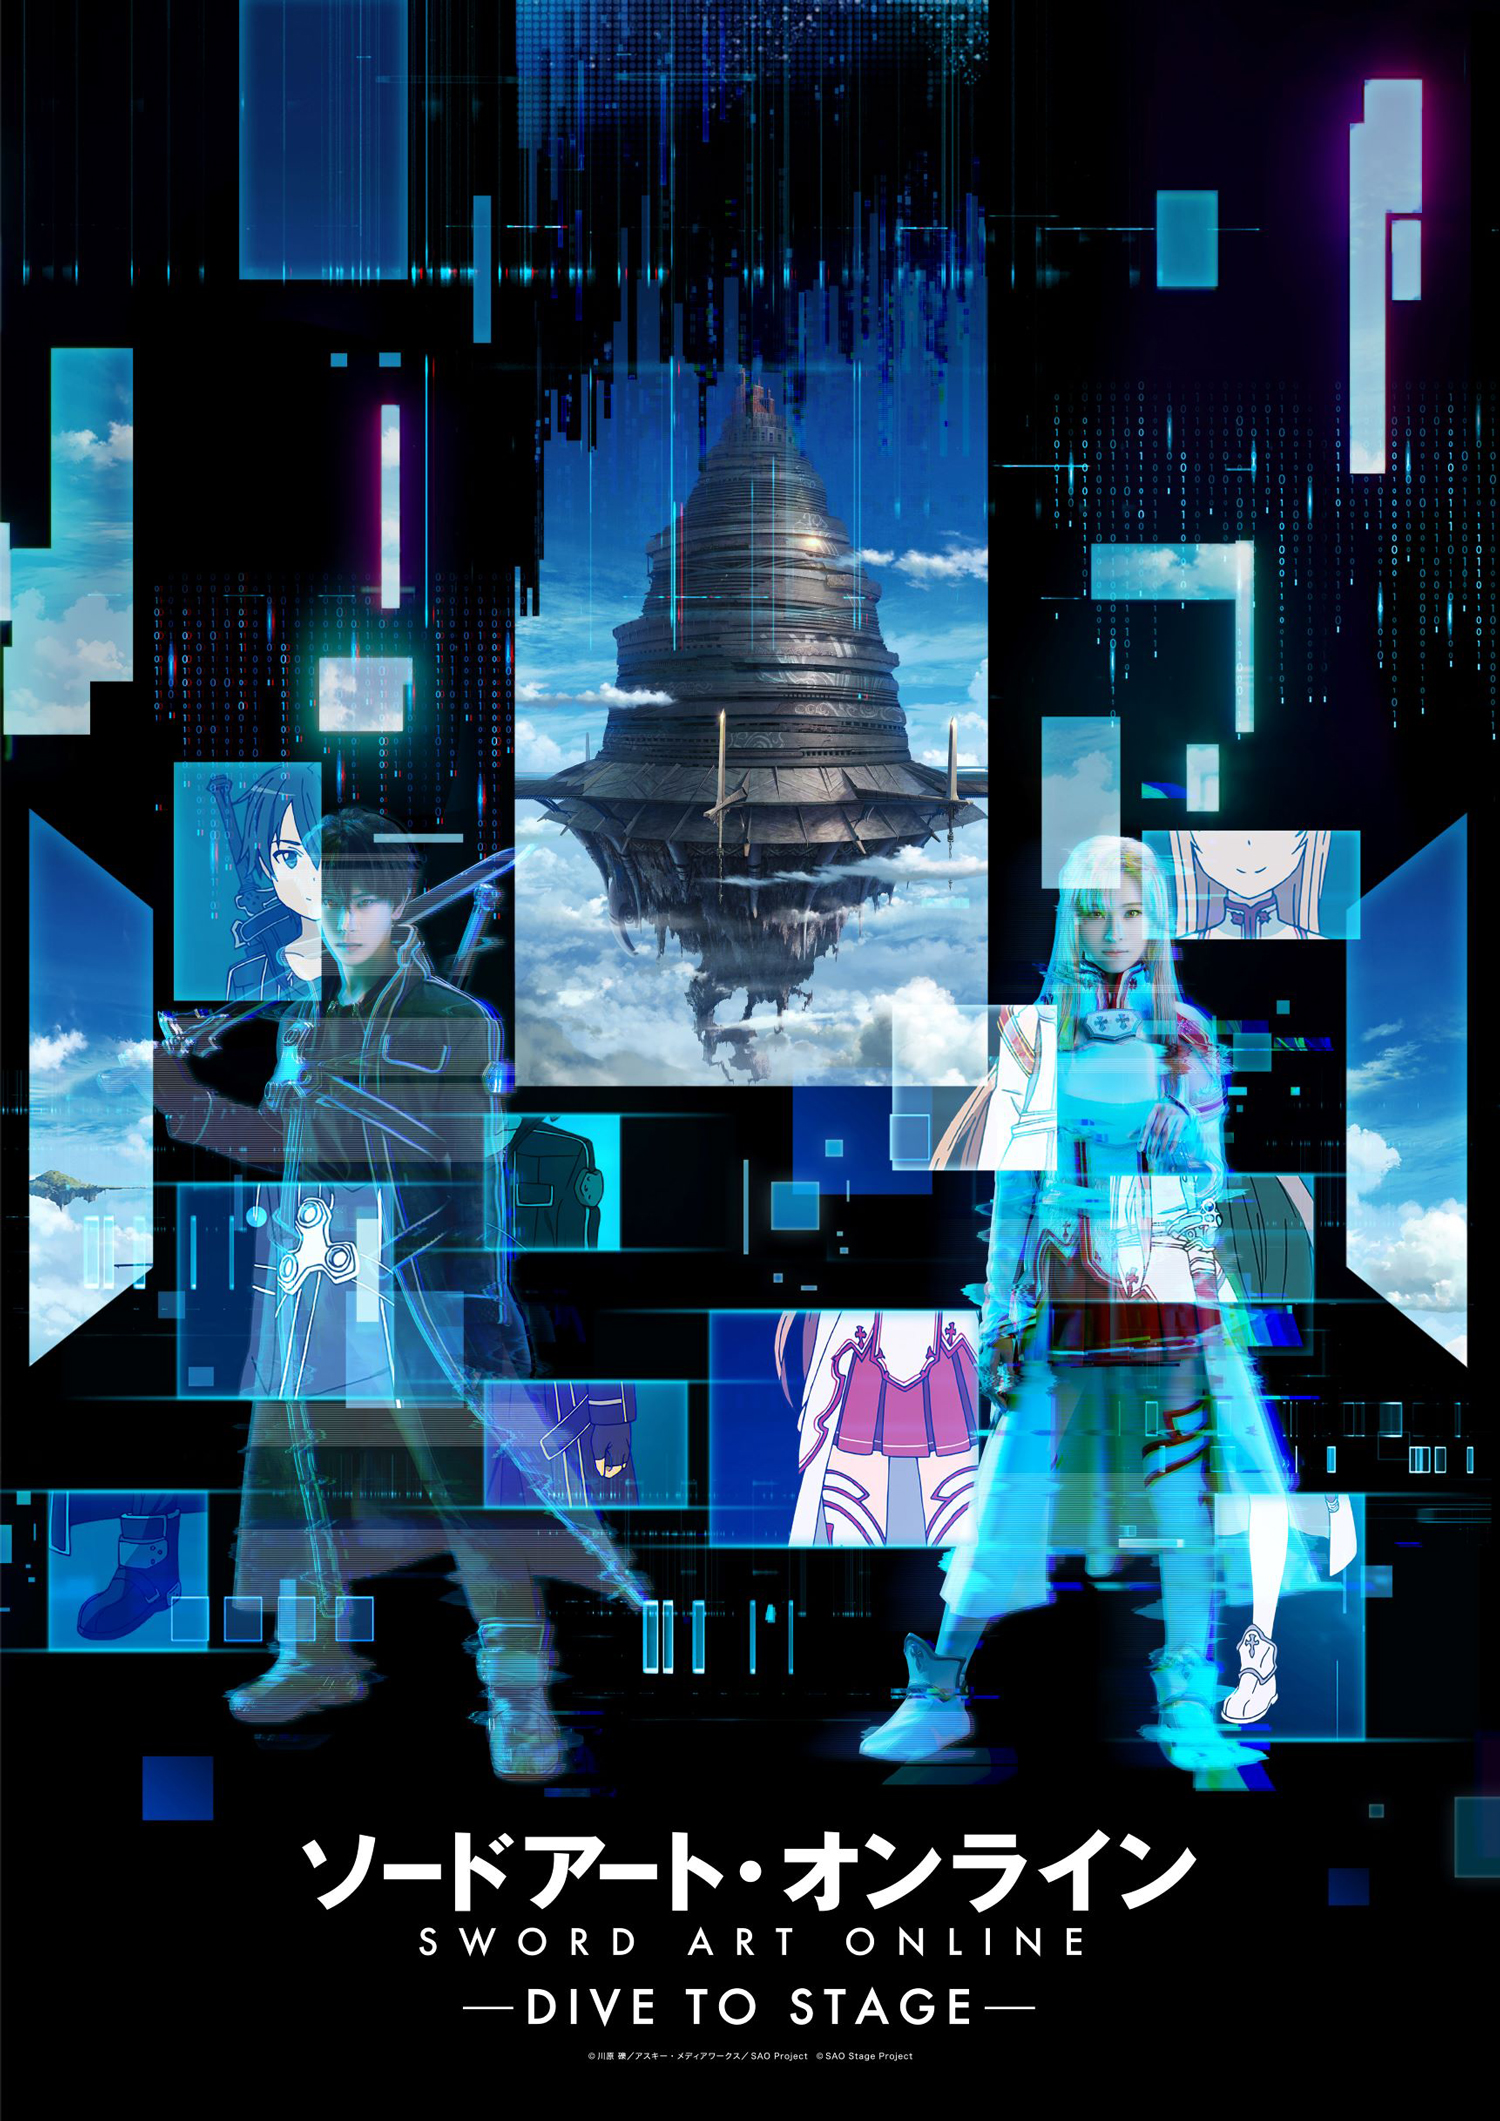 Sword Art Online Stage key visual